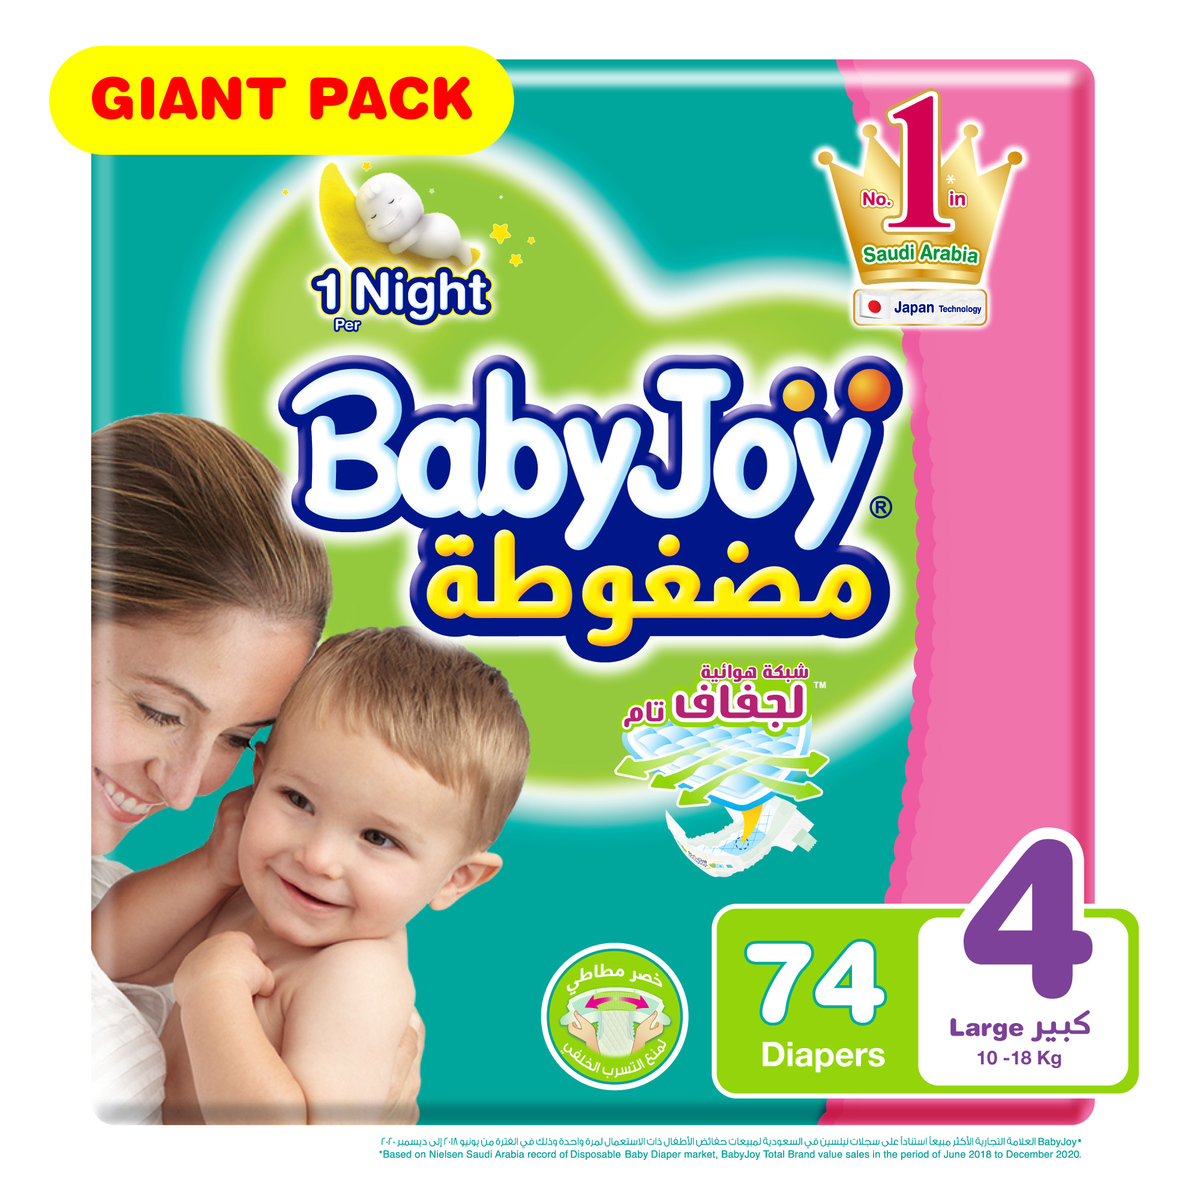 Baby Joy Diaper Size 4 Large 10-18kg Giant Pack 74 pcs